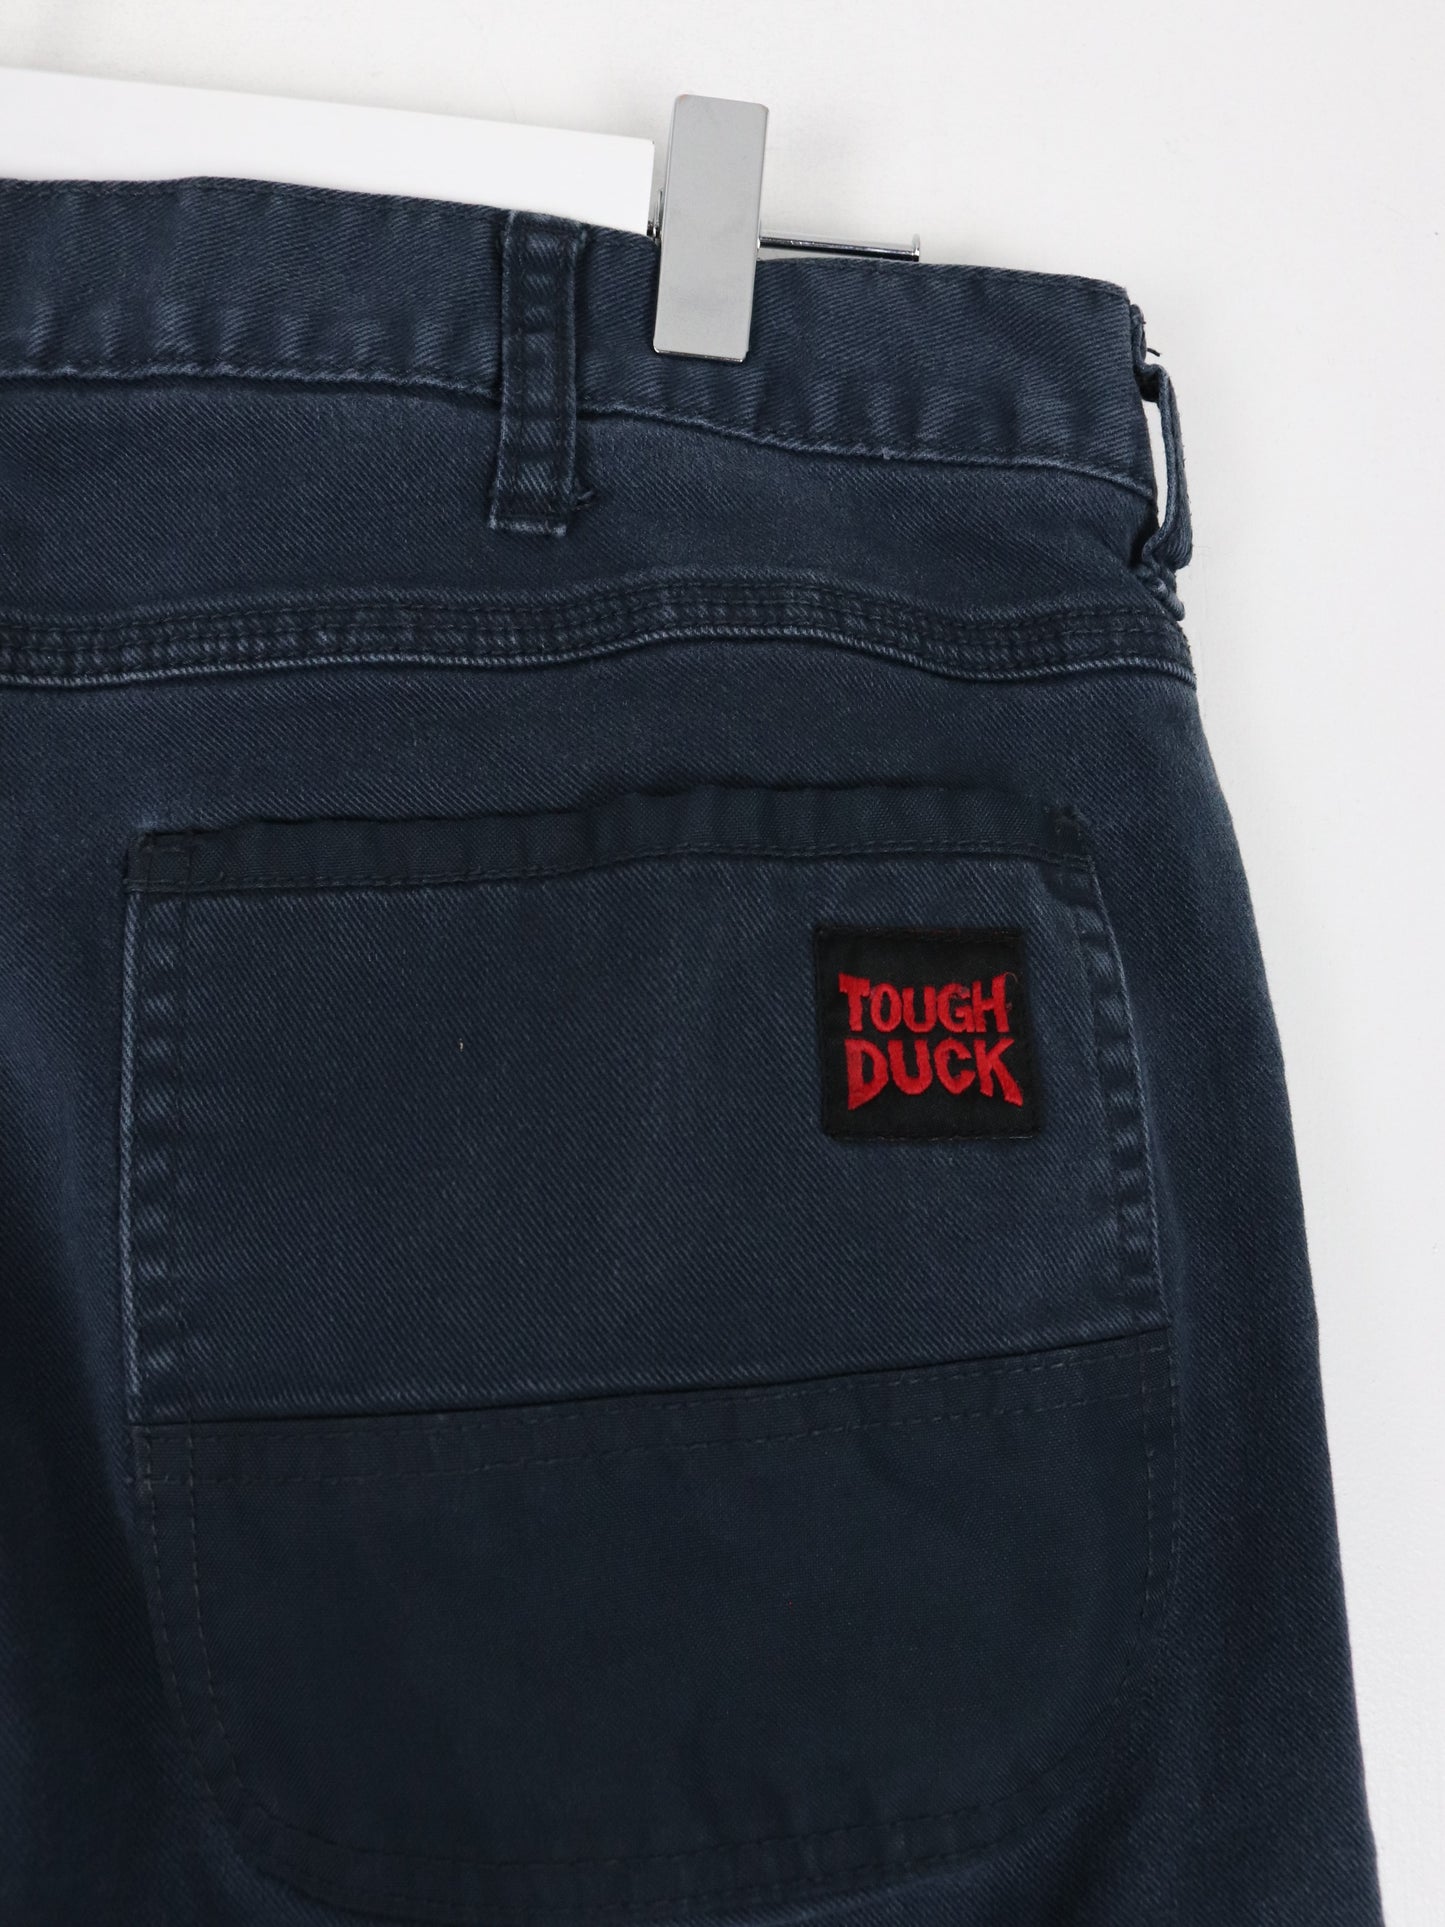 Tough Duck Pants Fits Mens 35 x 31 Blue Cargo Work Wear